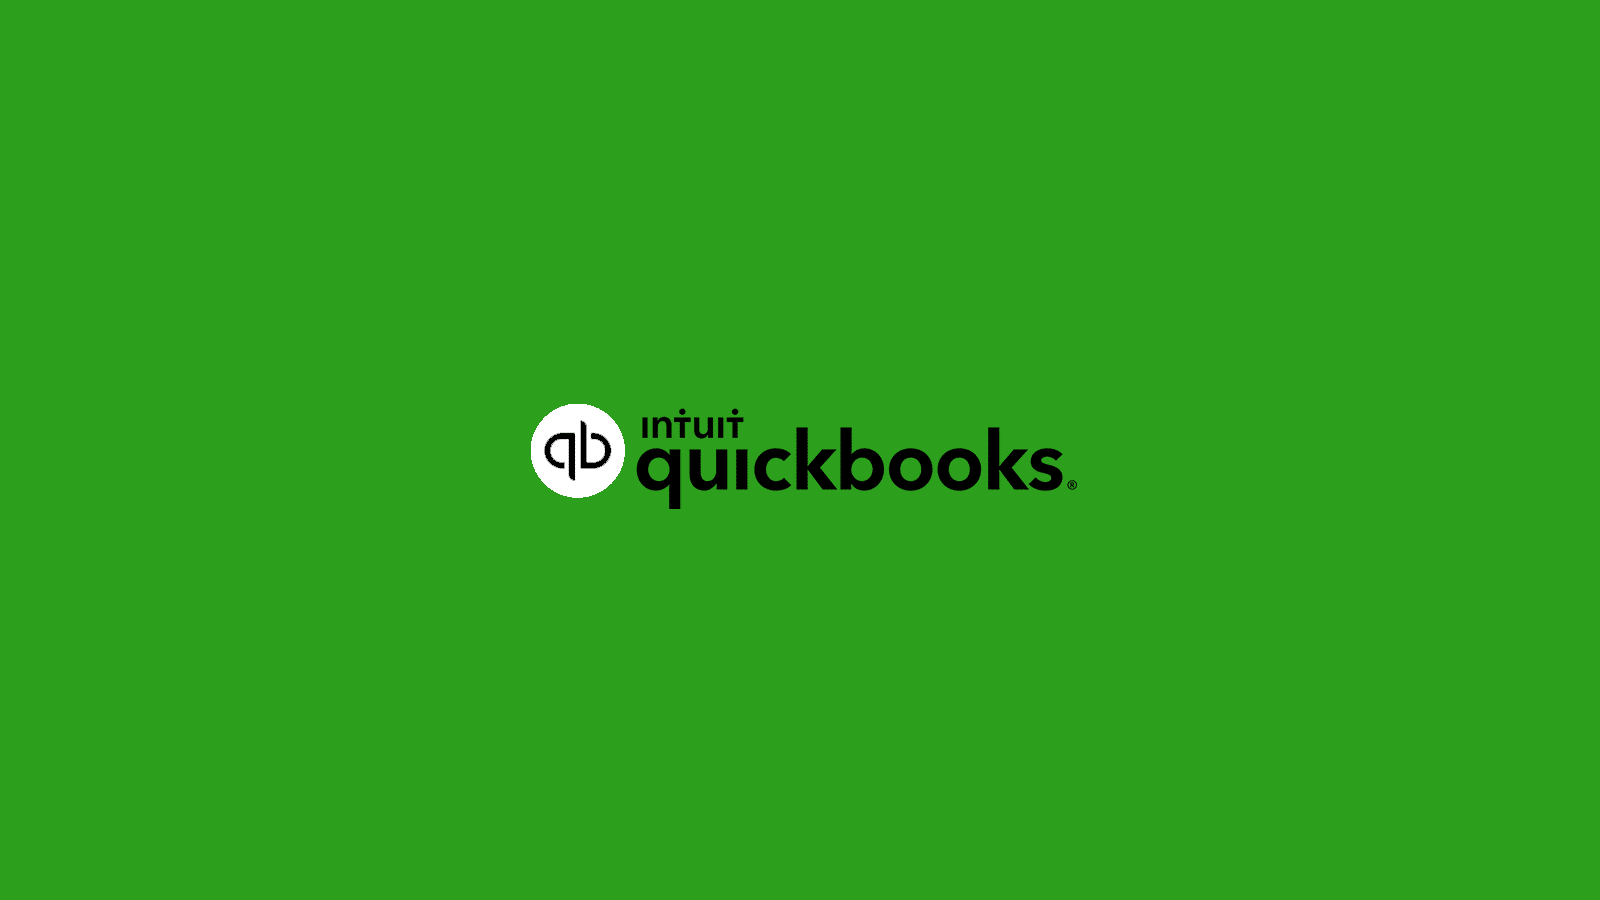 Image of Quickbooks logo